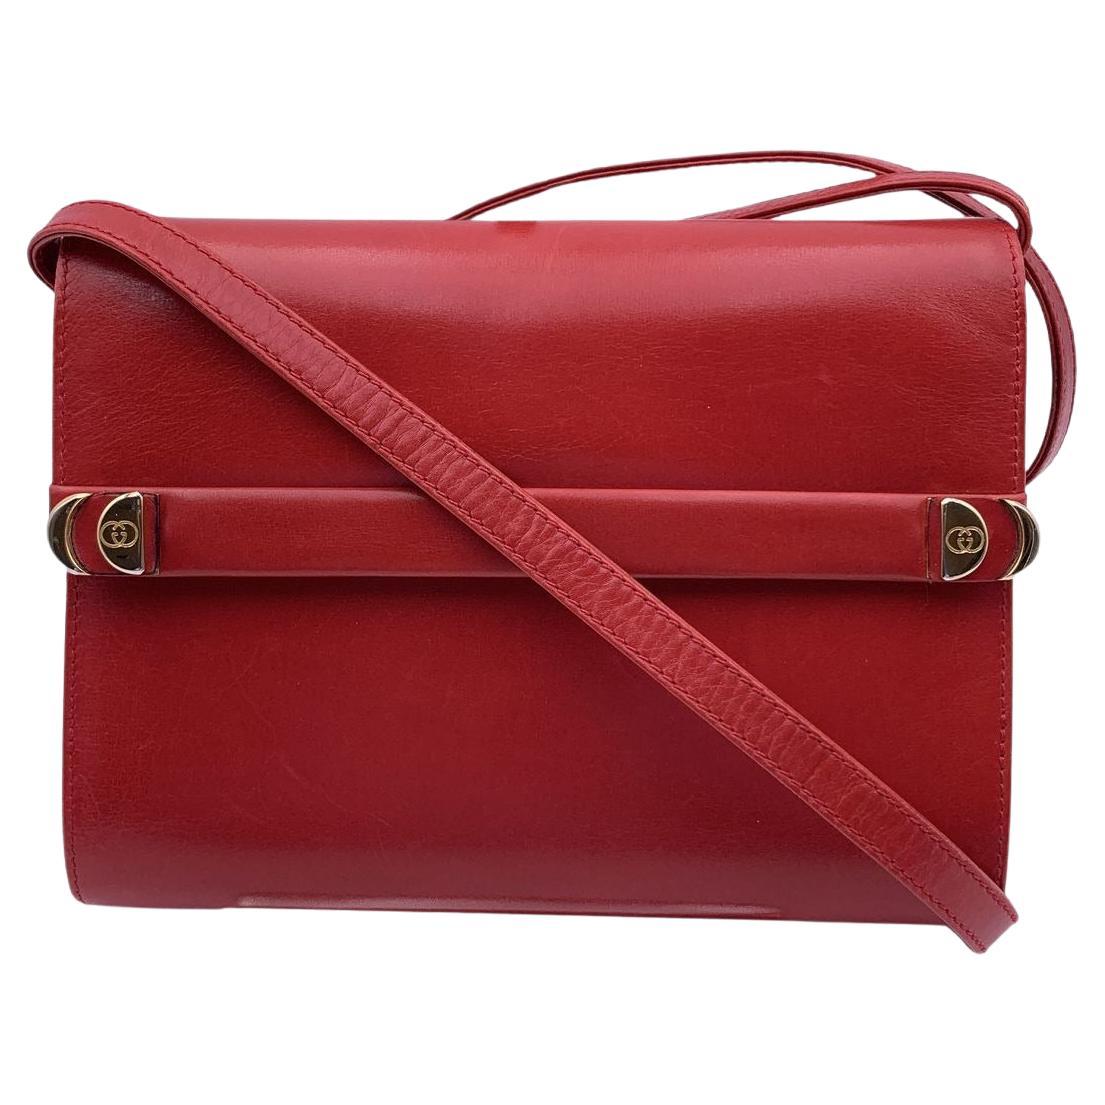 Gucci Vintage Red Leather Convertible Shoulder Bag Clutch For Sale